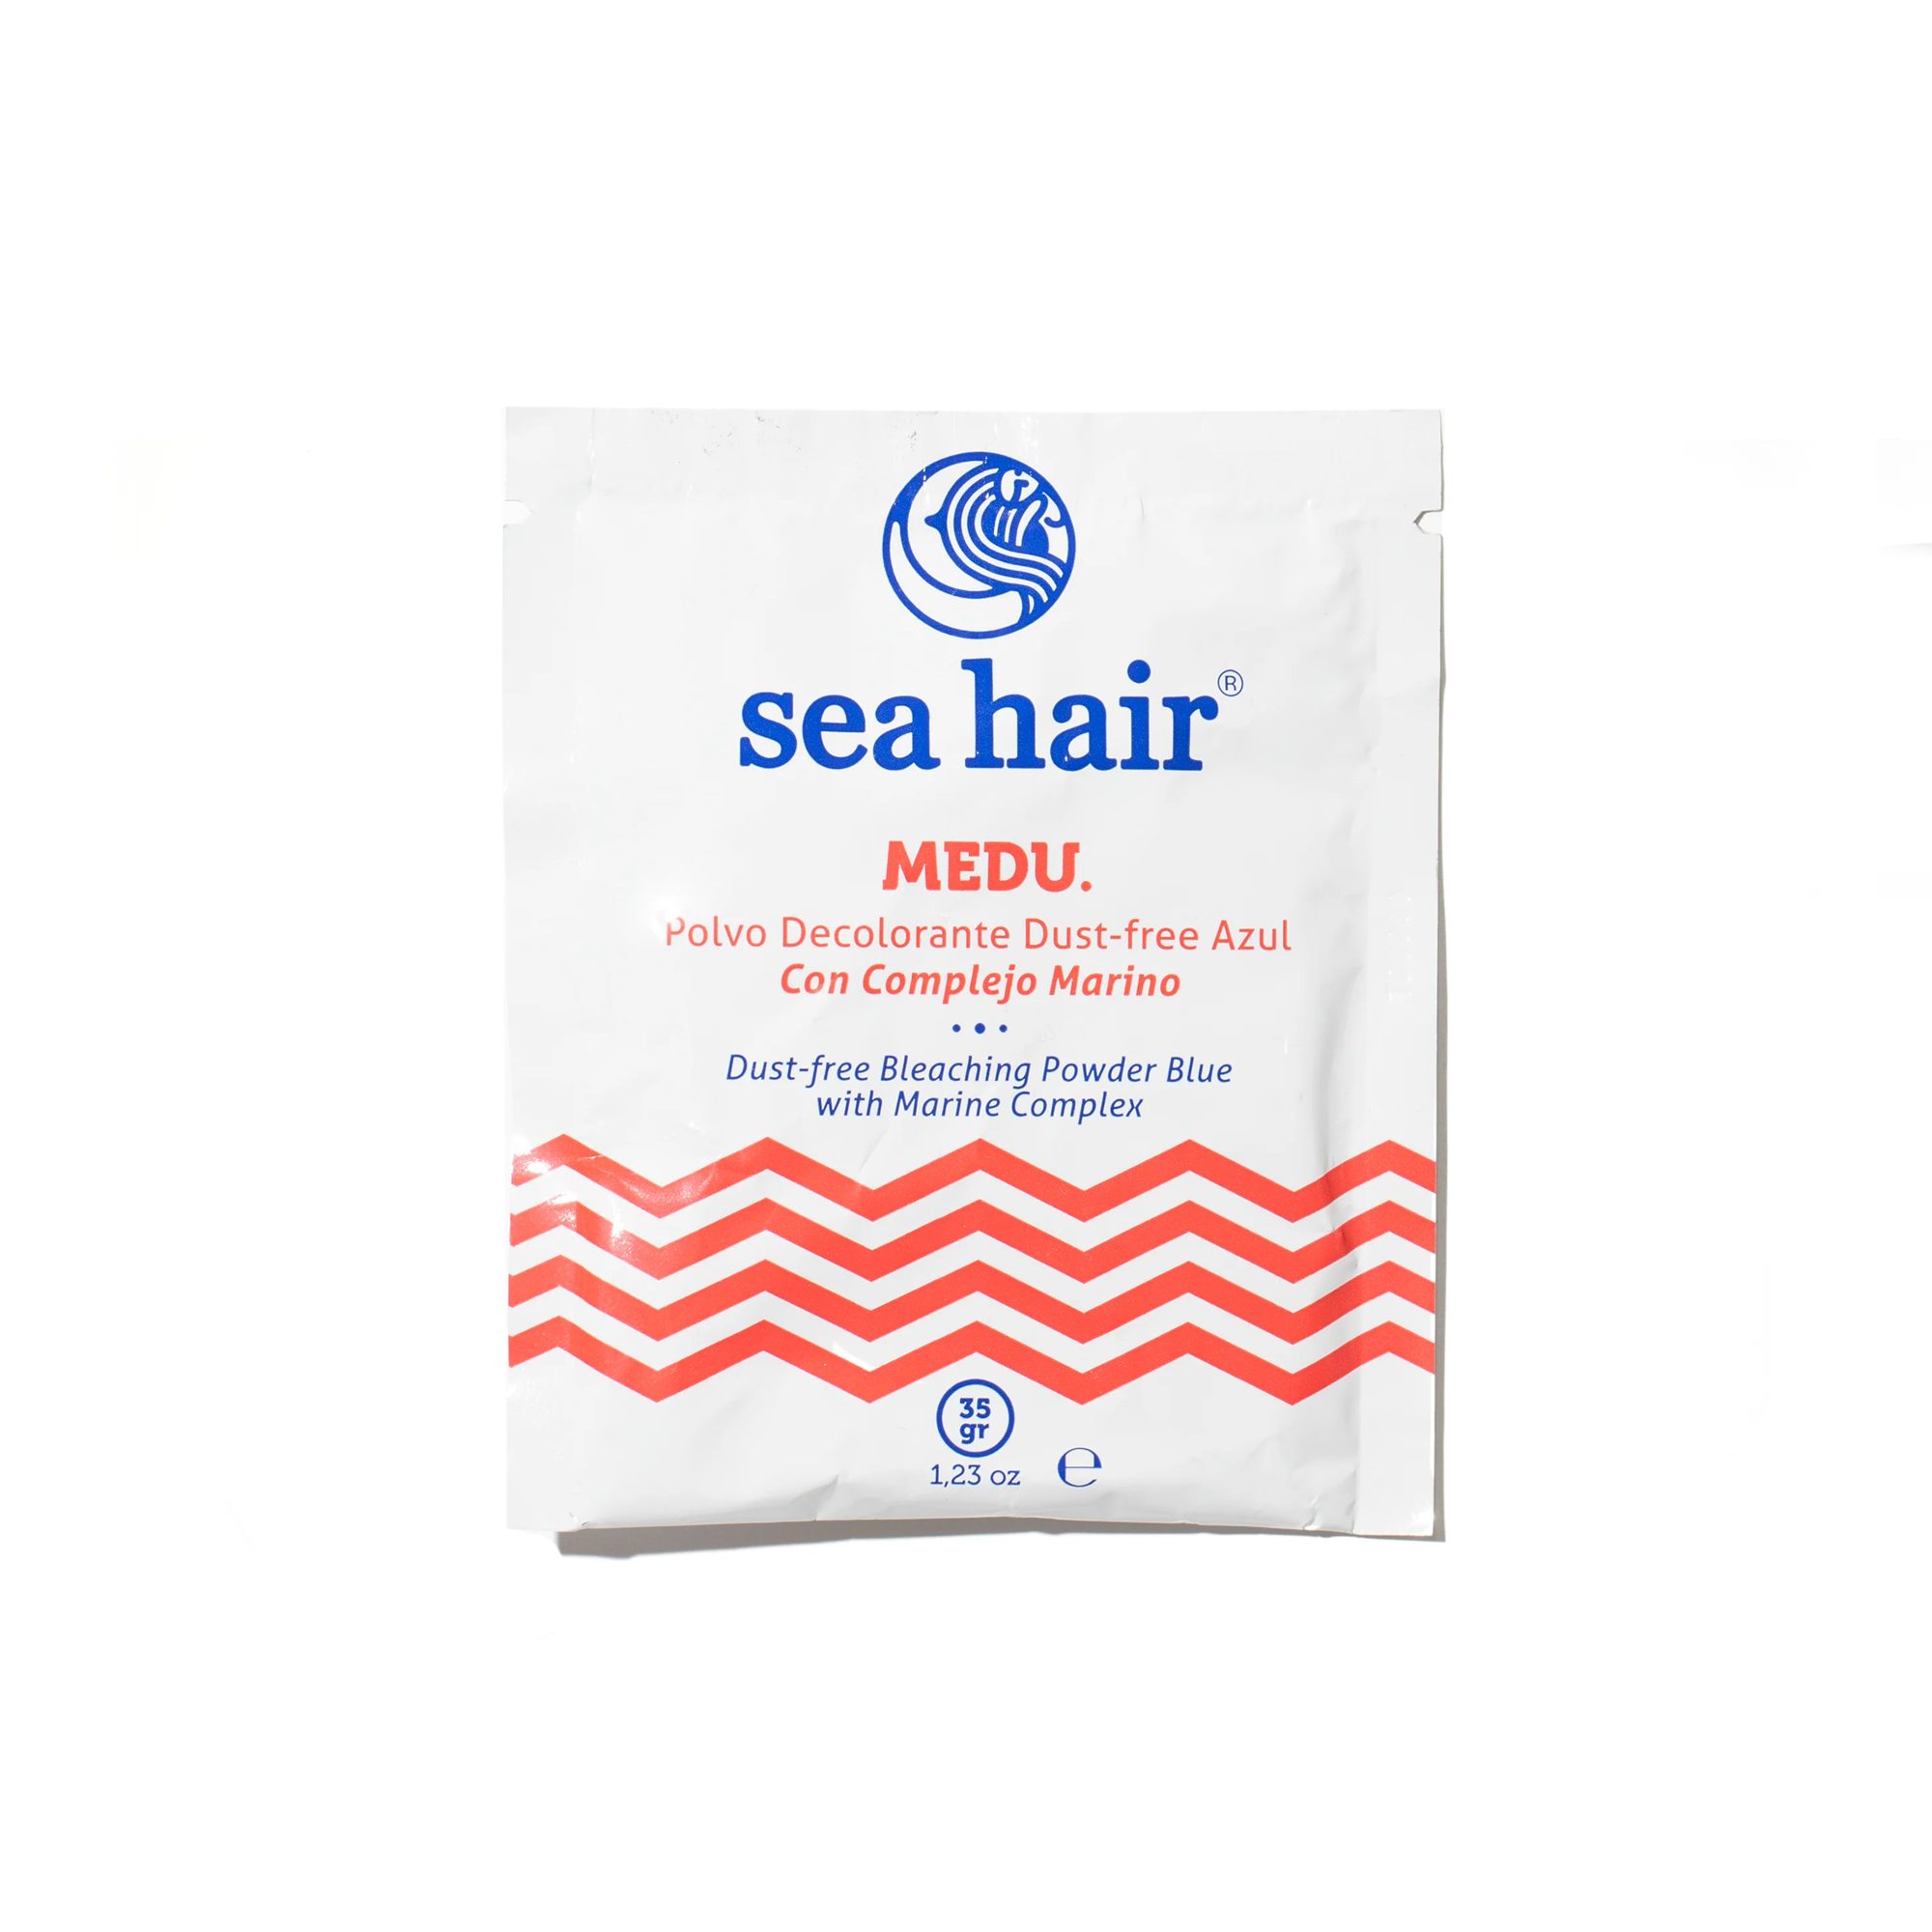 Decolorante Medu Dust Free Sea Hair